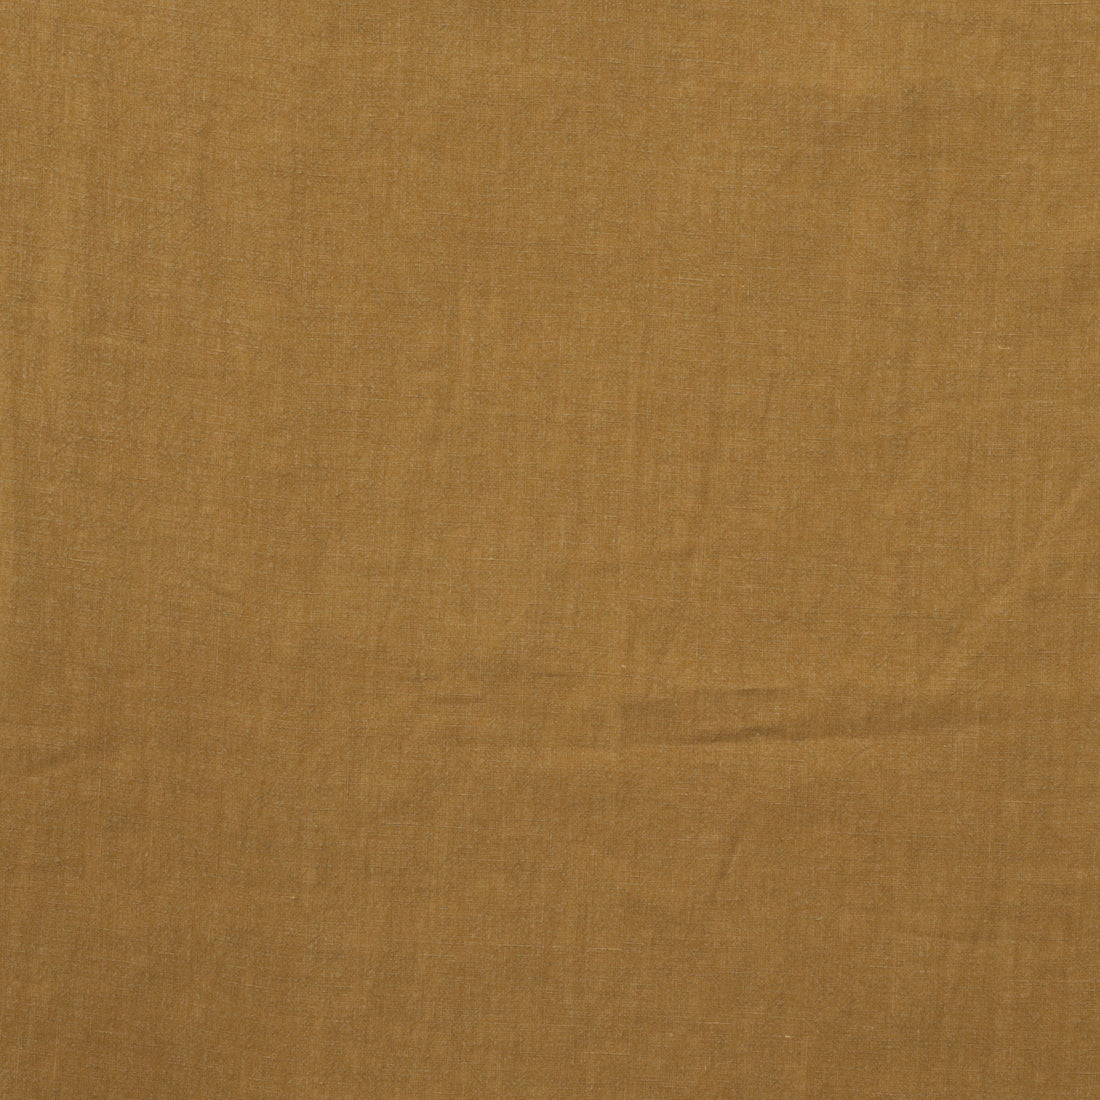 Linen - Cairo - 4.86 oz - Antique Wash - Assorted